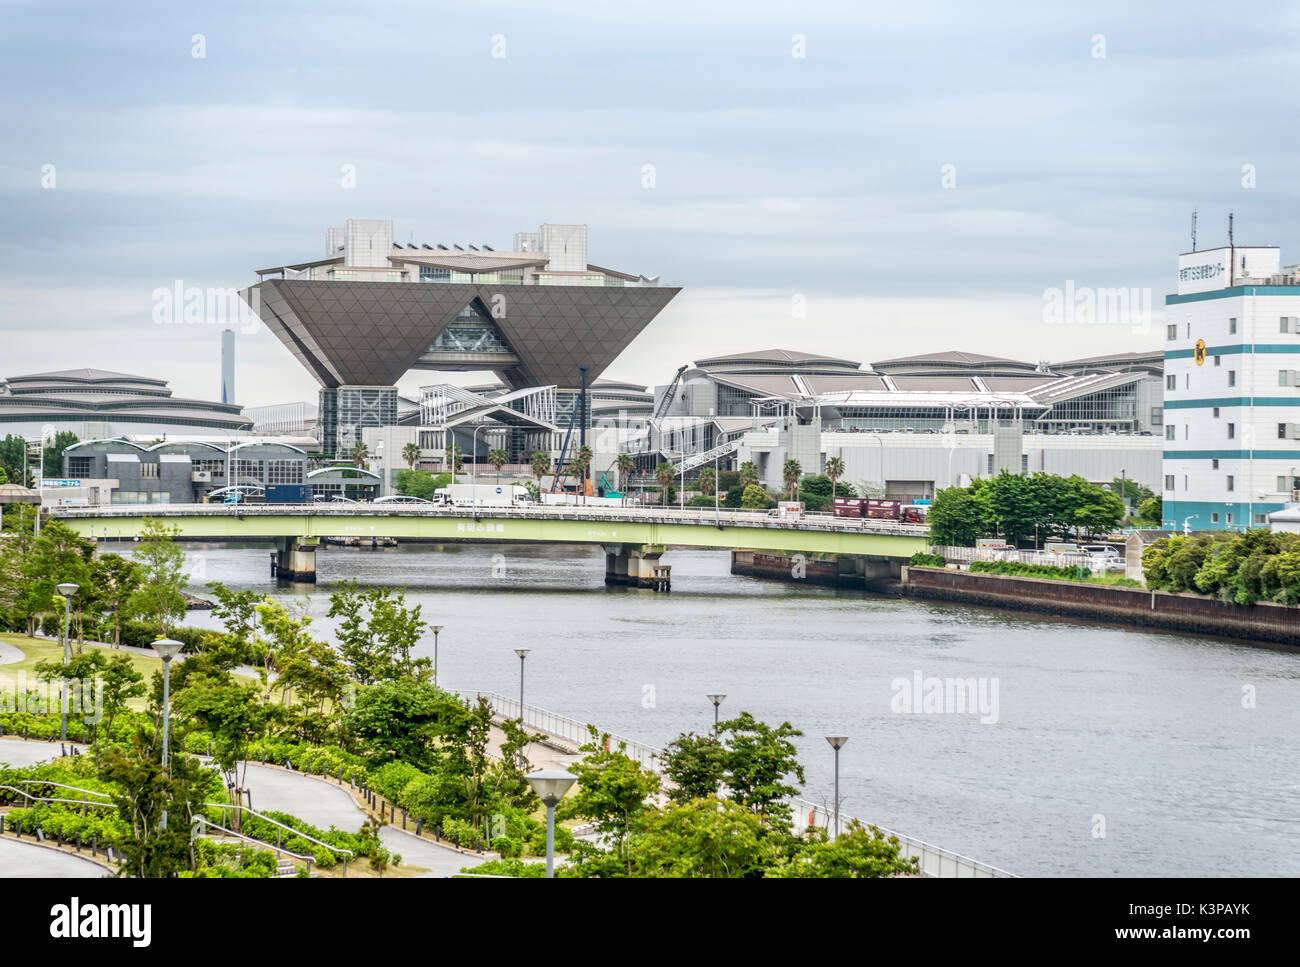 Tokyo Big Sight, known as Tokyo International Exhibition Center, Ariake, Japan Stock Photo